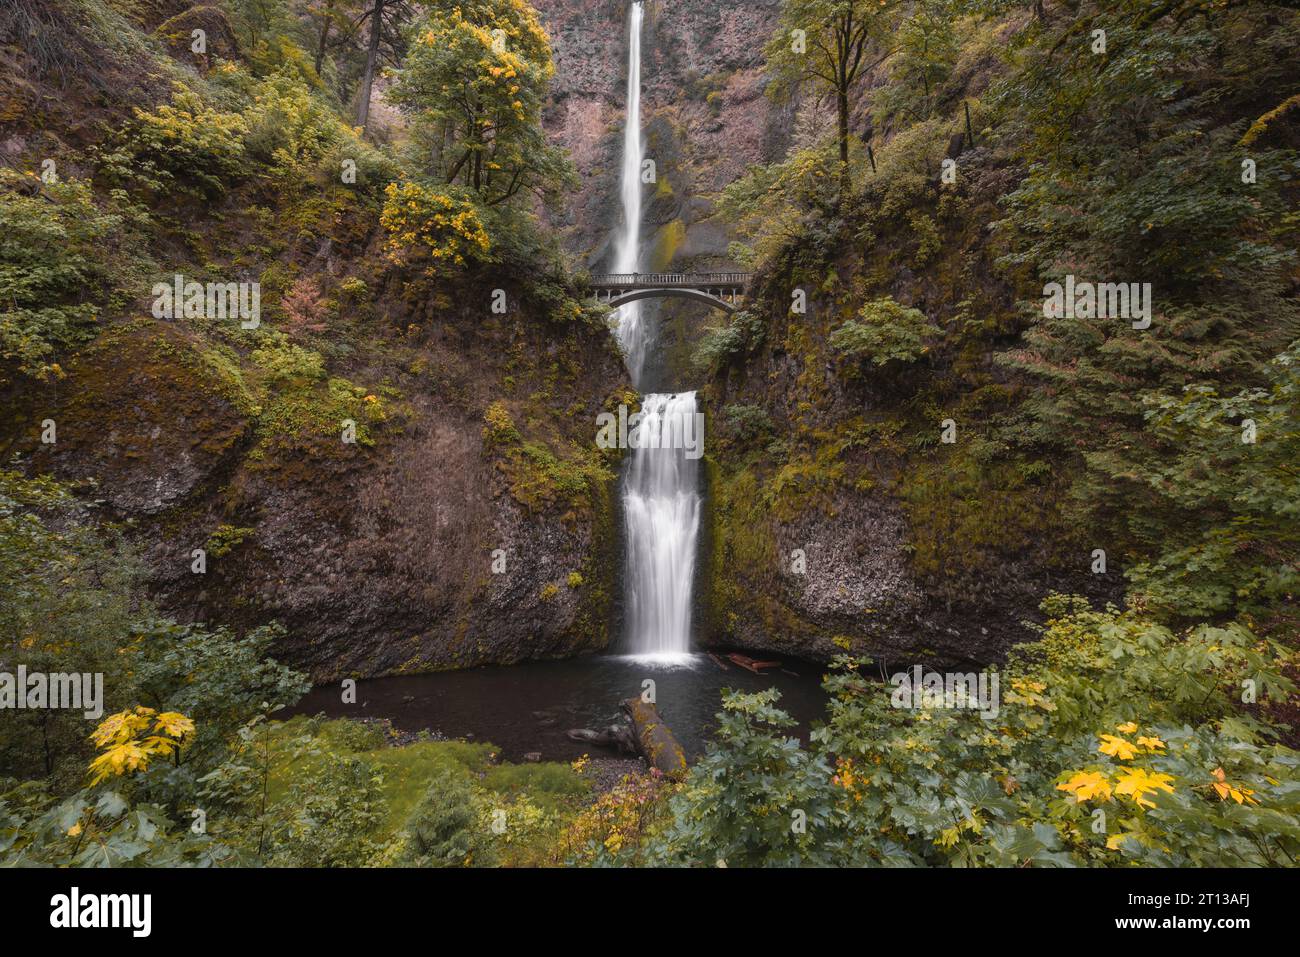 Beginn der Herbstsaison am Multnomah Falls Wasserfall, Columbia River Gorge, Oregon Stockfoto